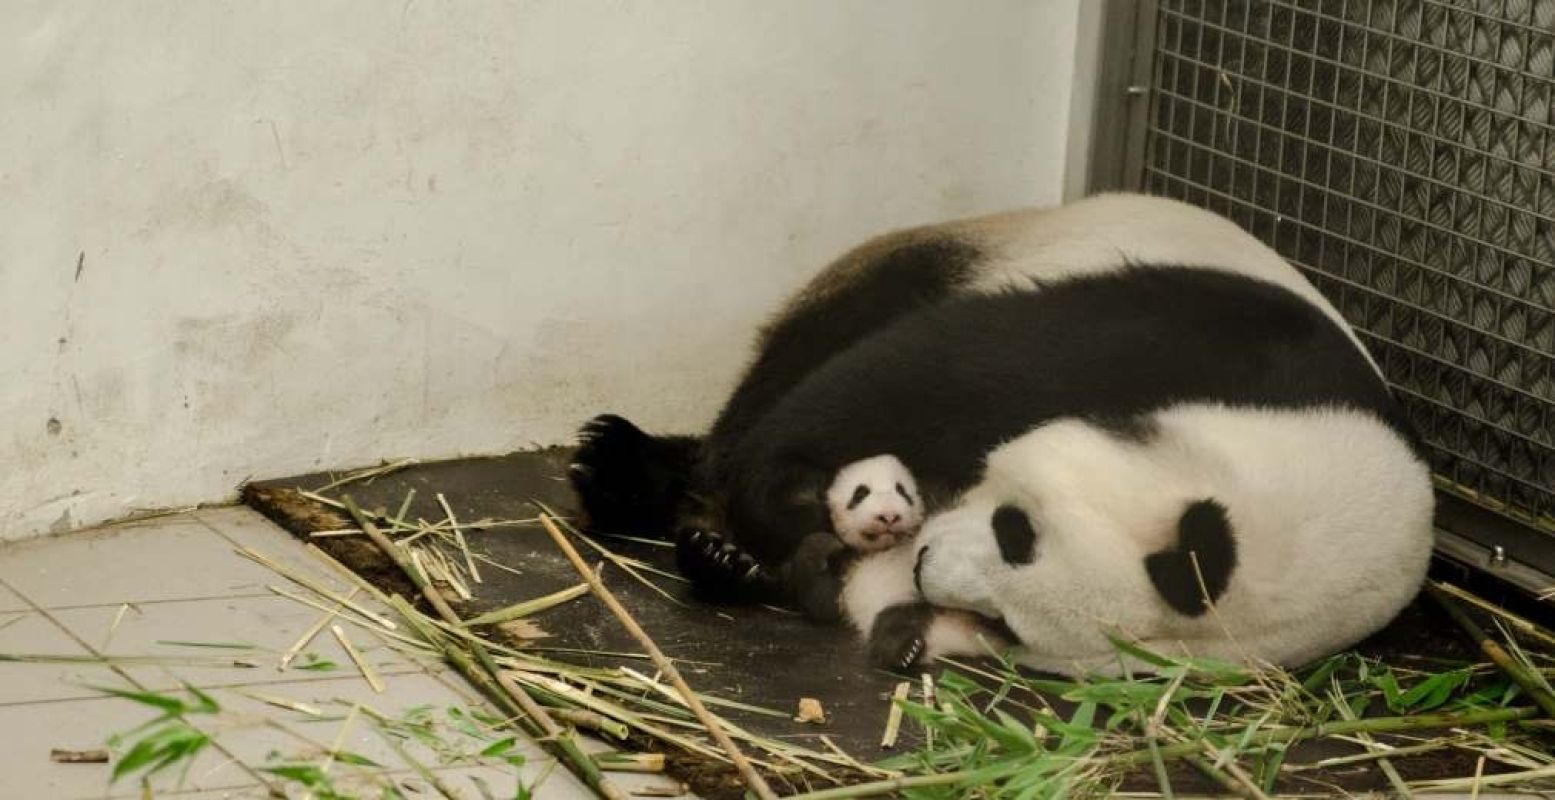 De kleine babyreuzenpanda is nu in het echt te bewonderen! Foto: Pairi Daiza/Benoit Bouchez